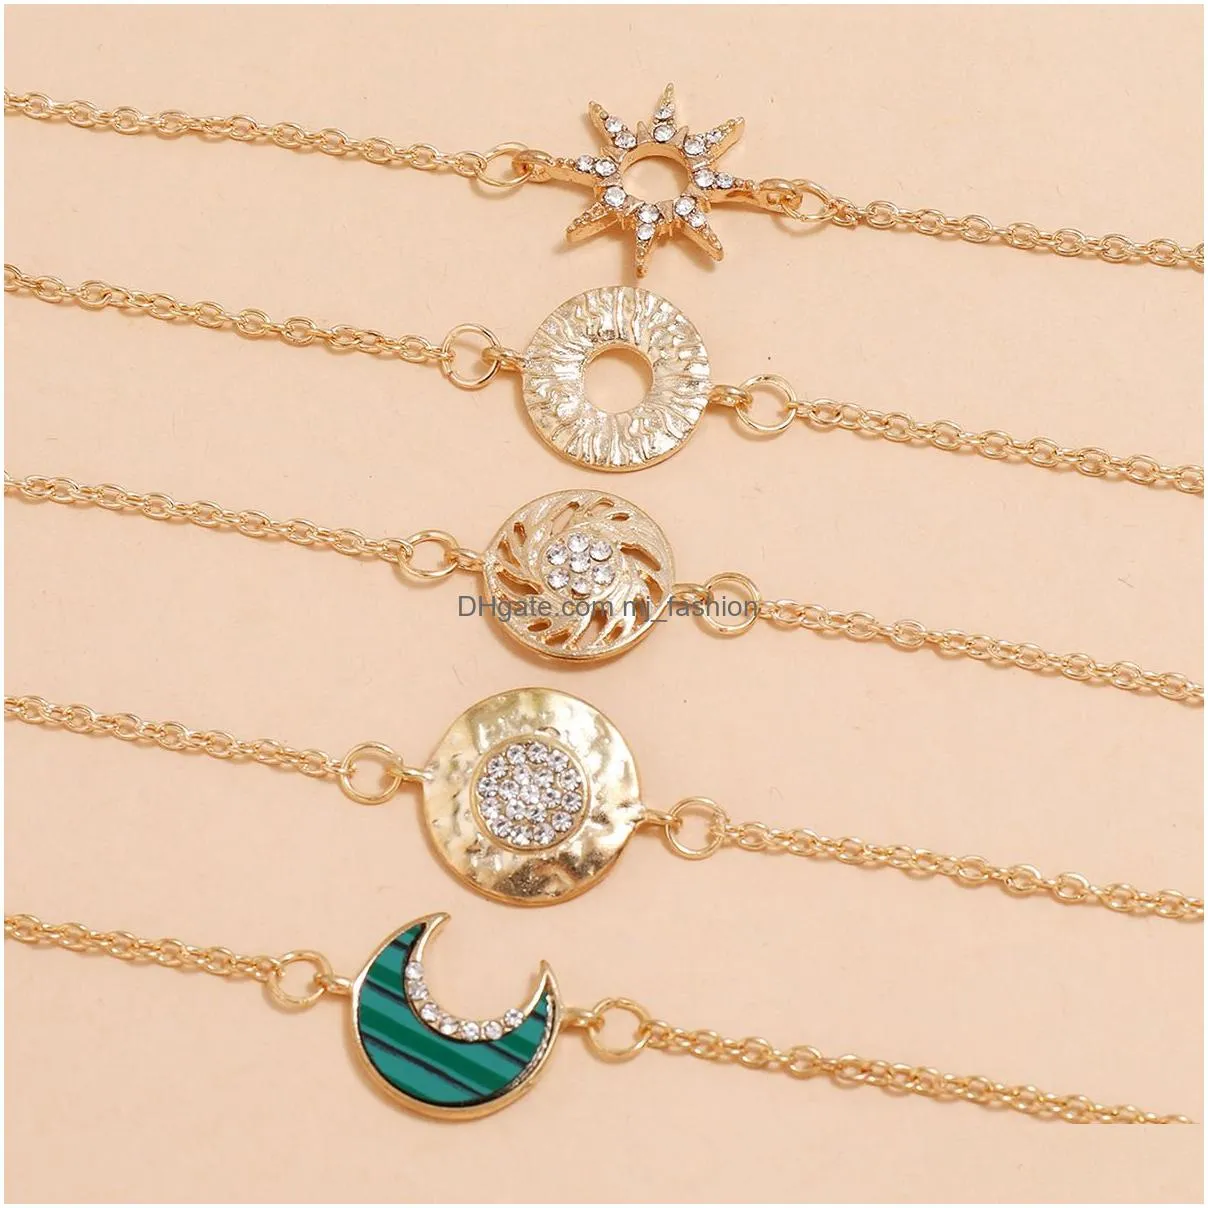 5pcs/set bohemia geometric circle moon charm bracelets hollow rhinestone sun star decor gold color chain wristlets jewelry gift